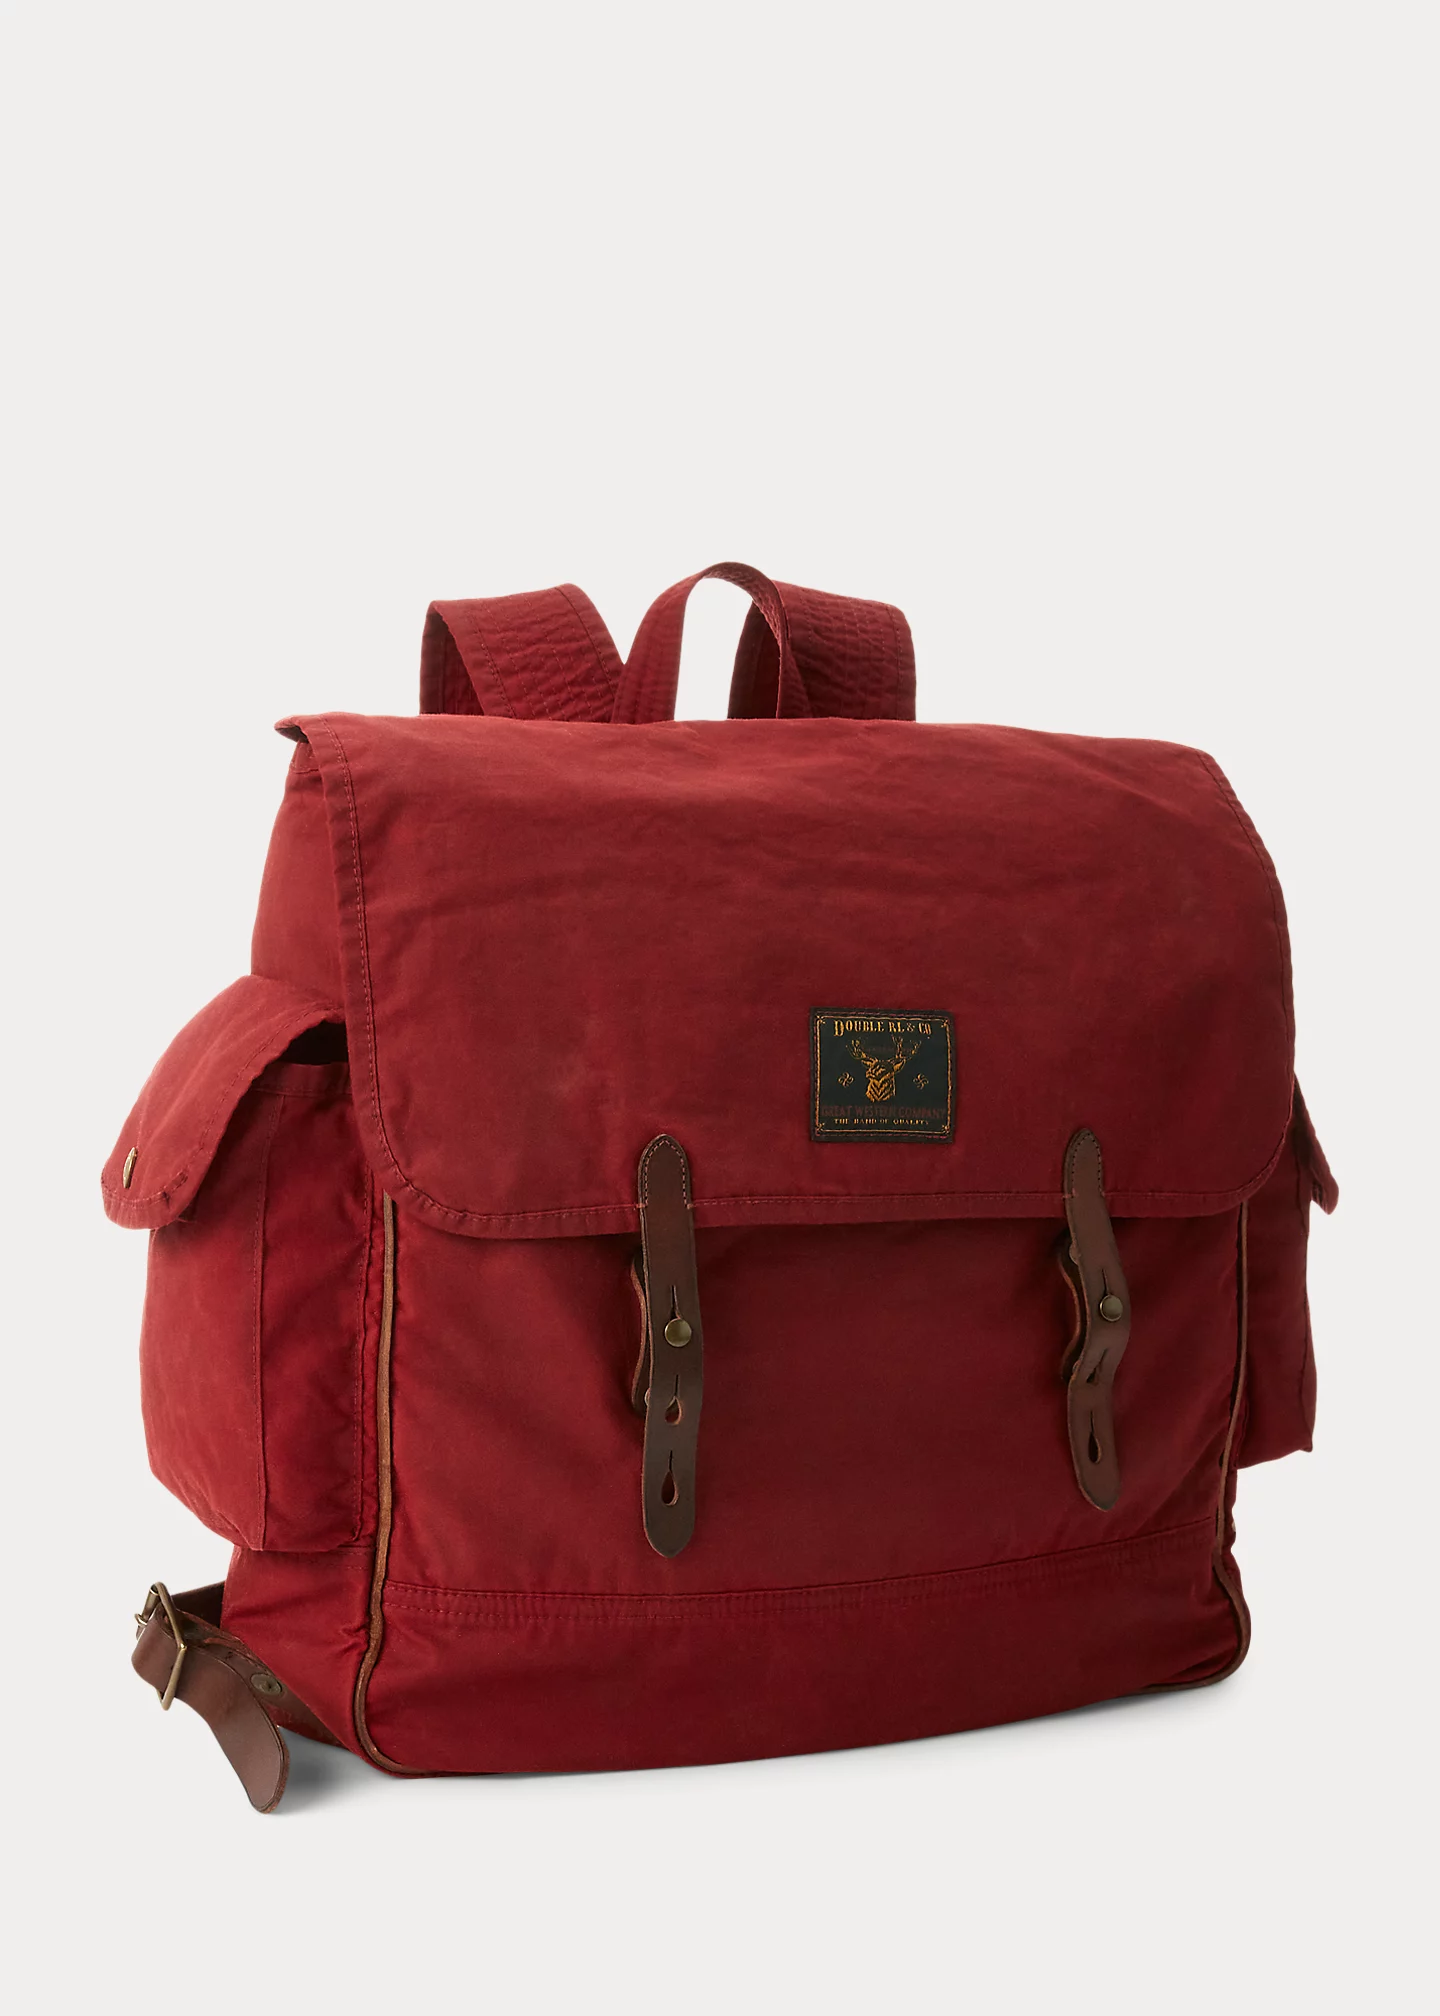 stylish handbagsLeather-Trim Oilcloth Backpack-,$78.39-0